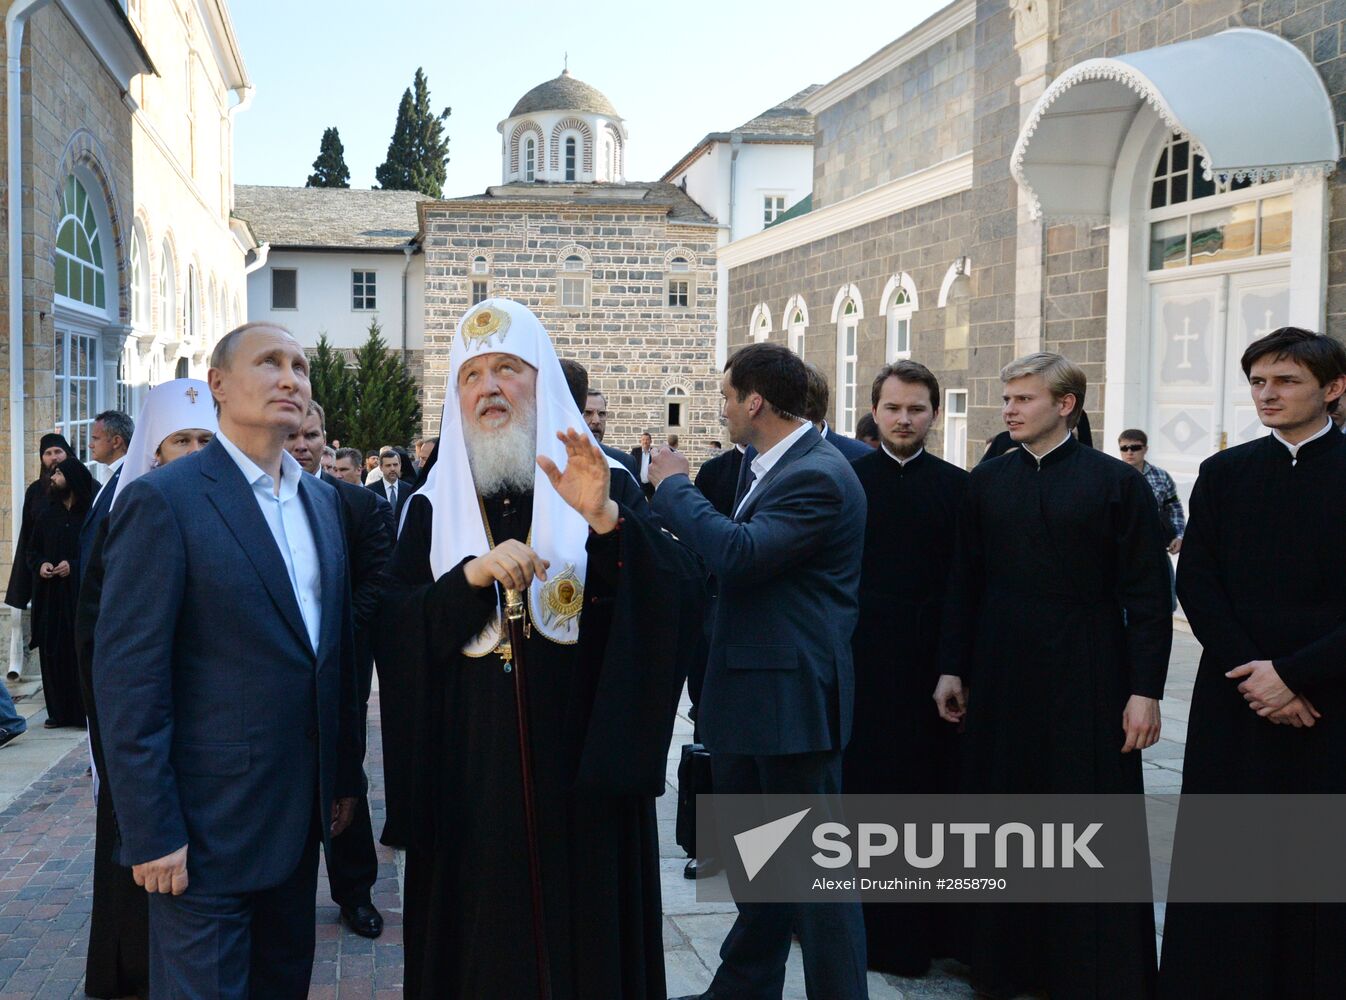 President Vladimir Putin's visit to Greece. Day Two